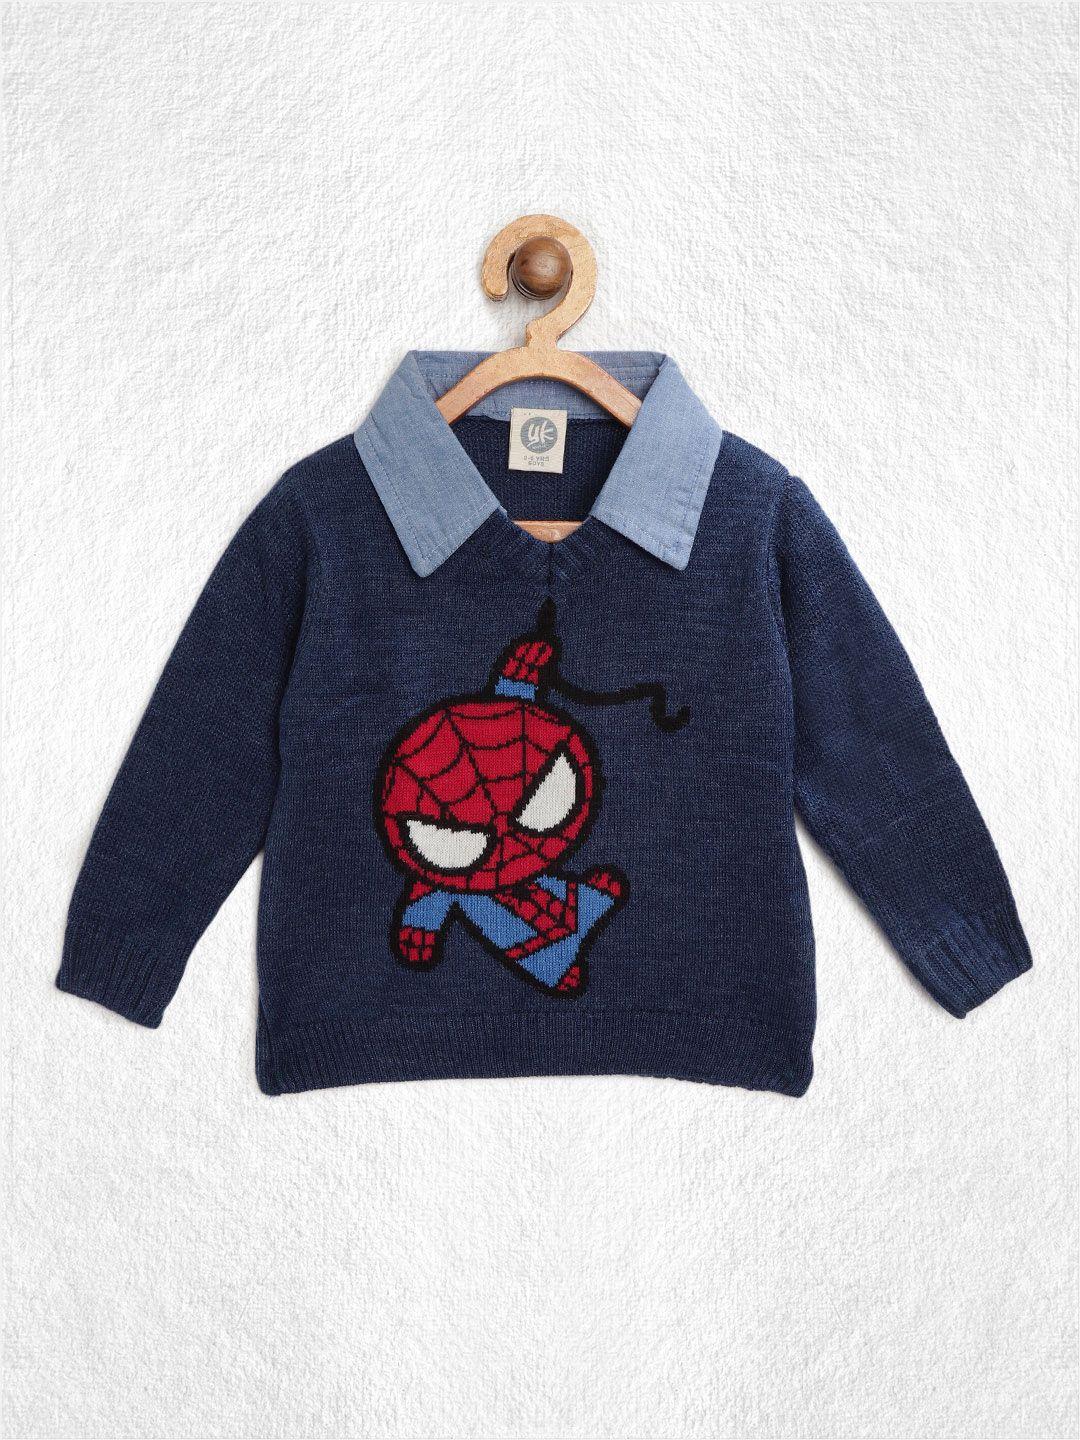 yk marvel boys navy blue & red spiderman self design pullover